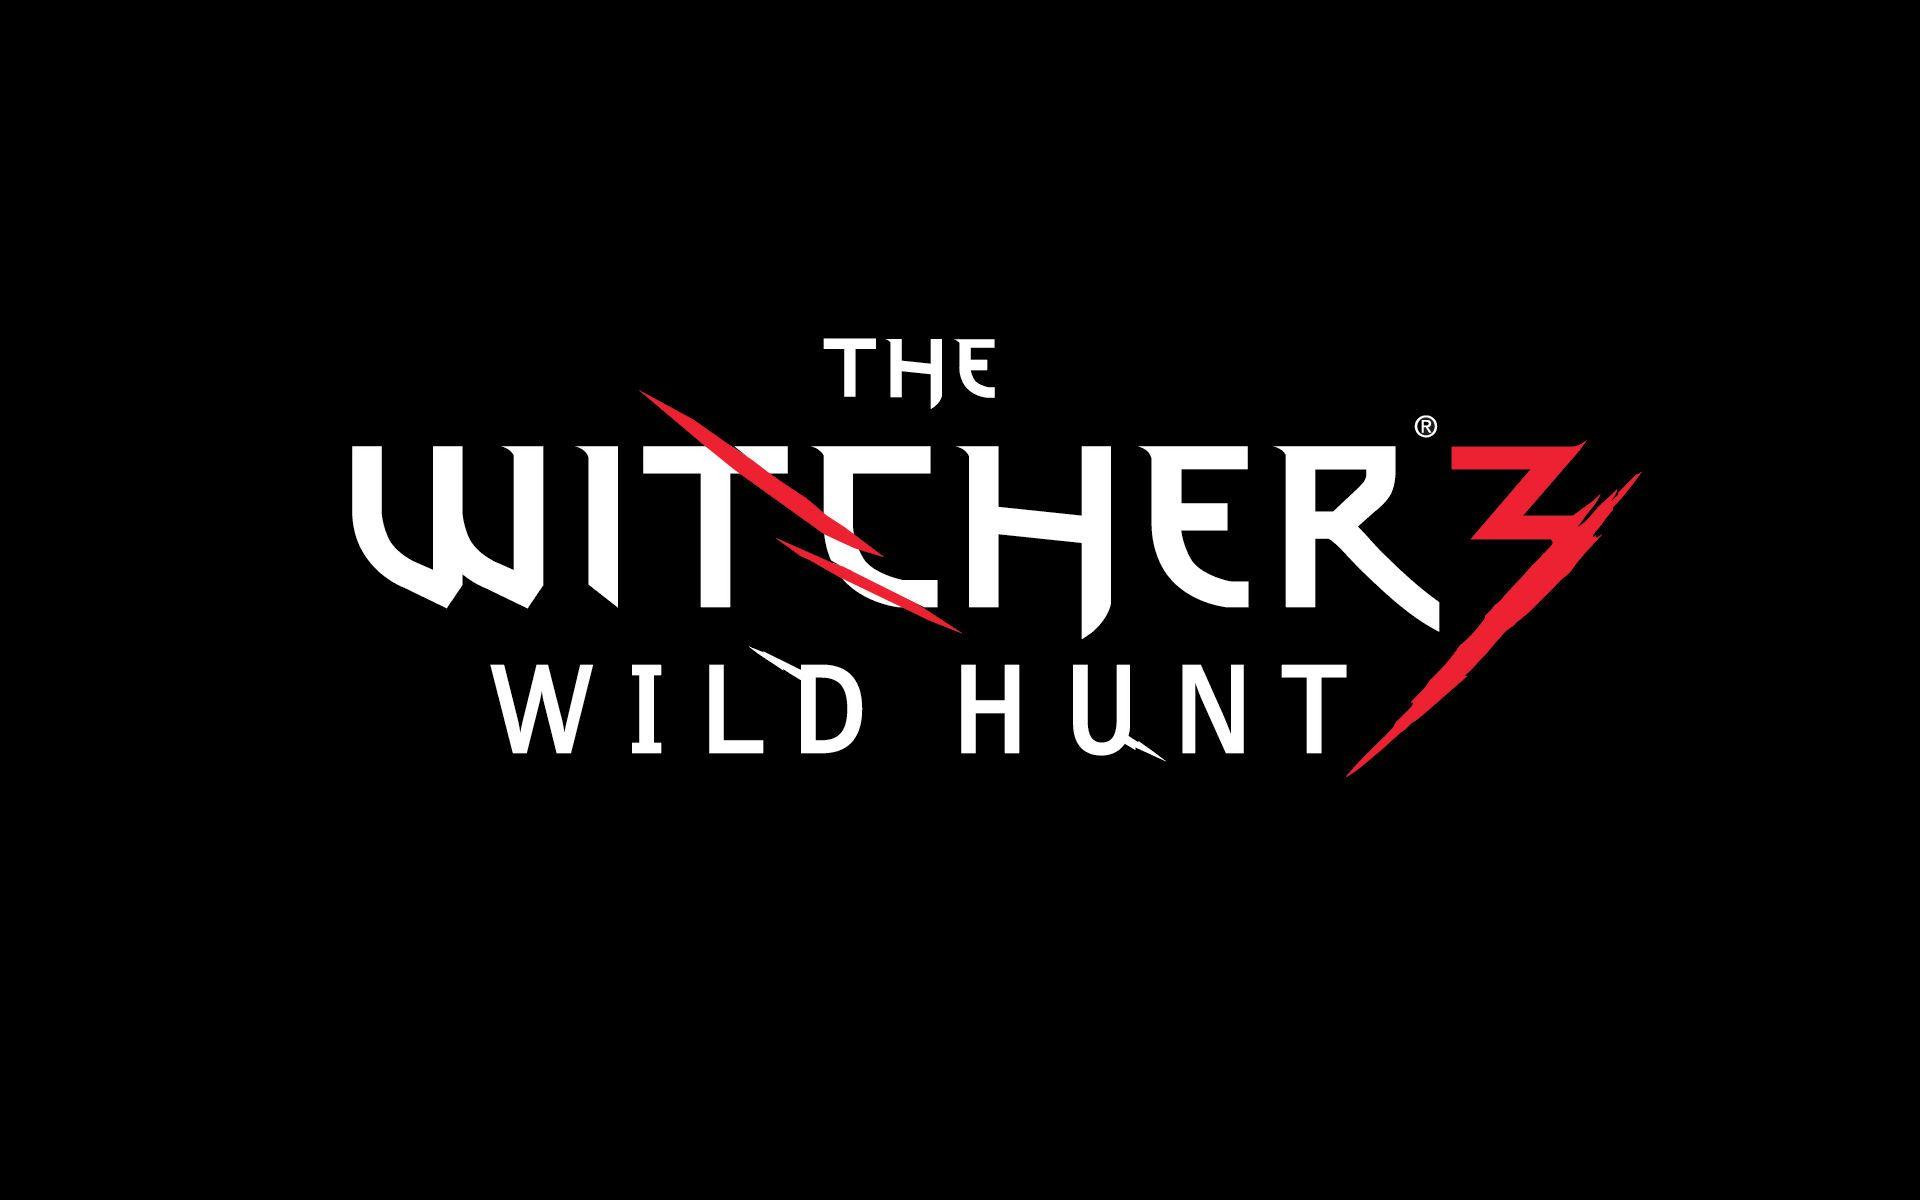 The Witcher 3 Wild Hunt Logo Wallpaper 44779 1920x1200 px